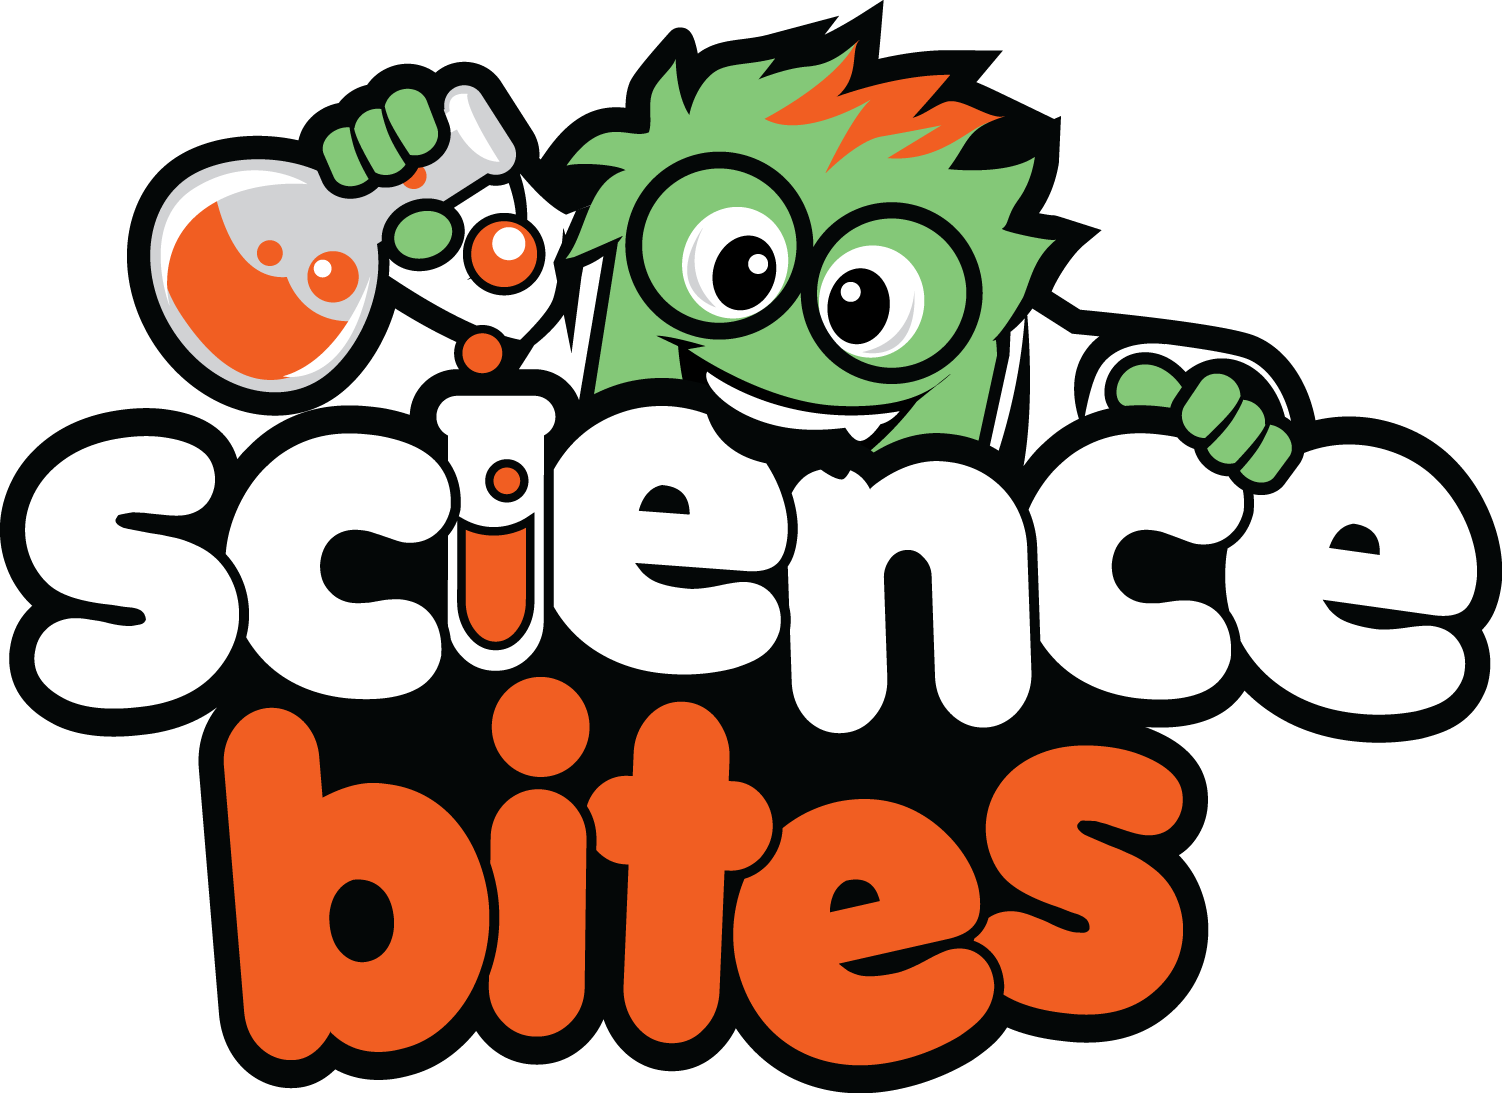 Science exhibitions in School